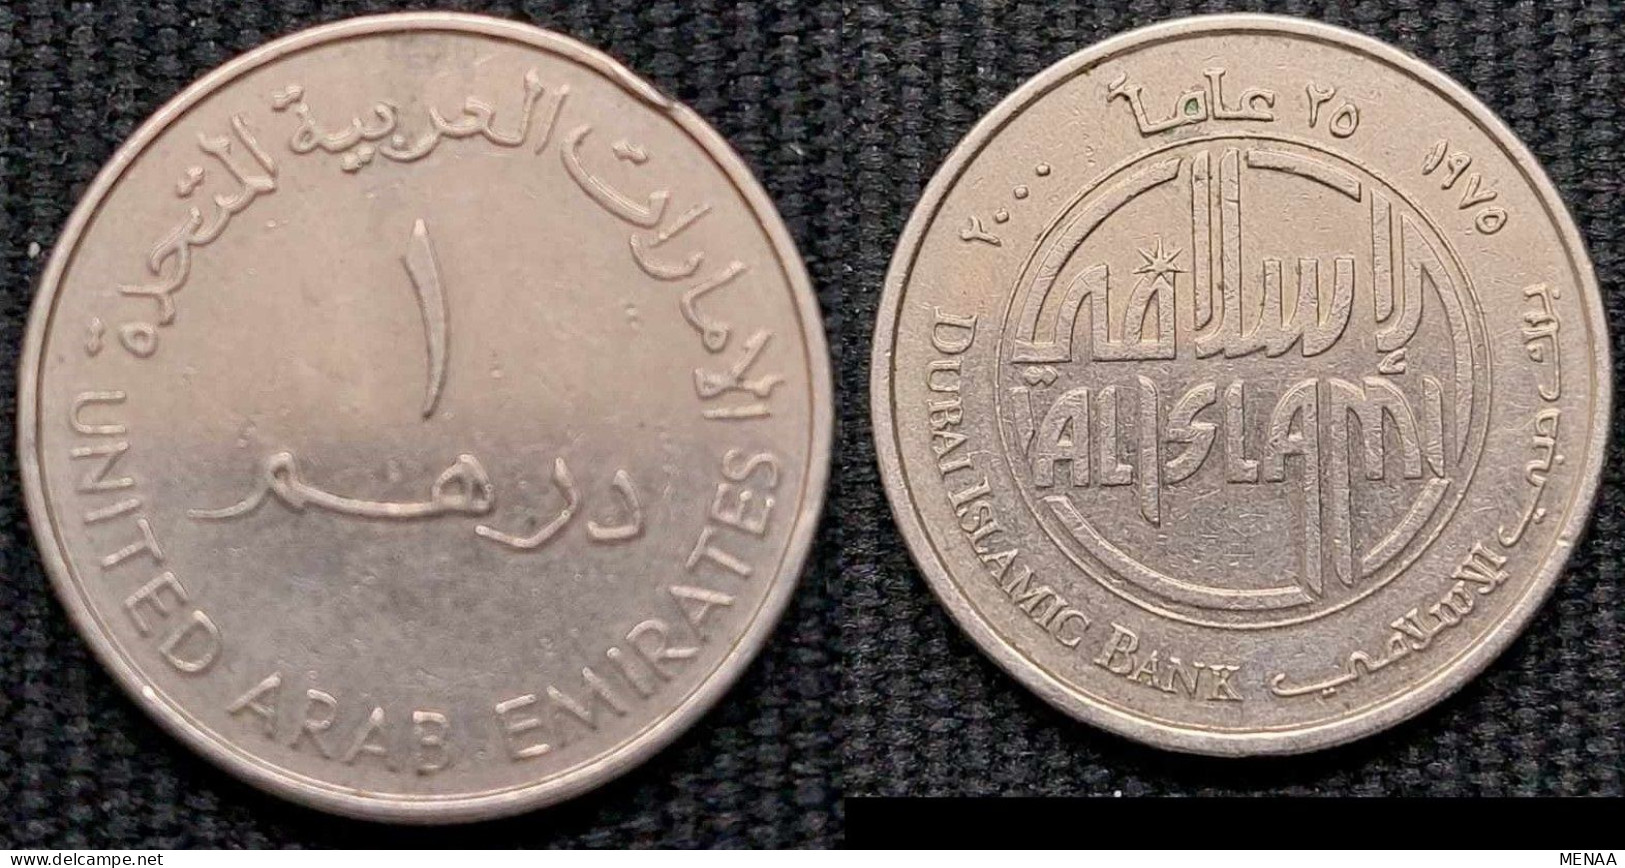 United Arab Emirates -1 Dirham -2000-The Silver Jubilee Of Dubai Islamic Bank - KM 43 - Emiratos Arabes